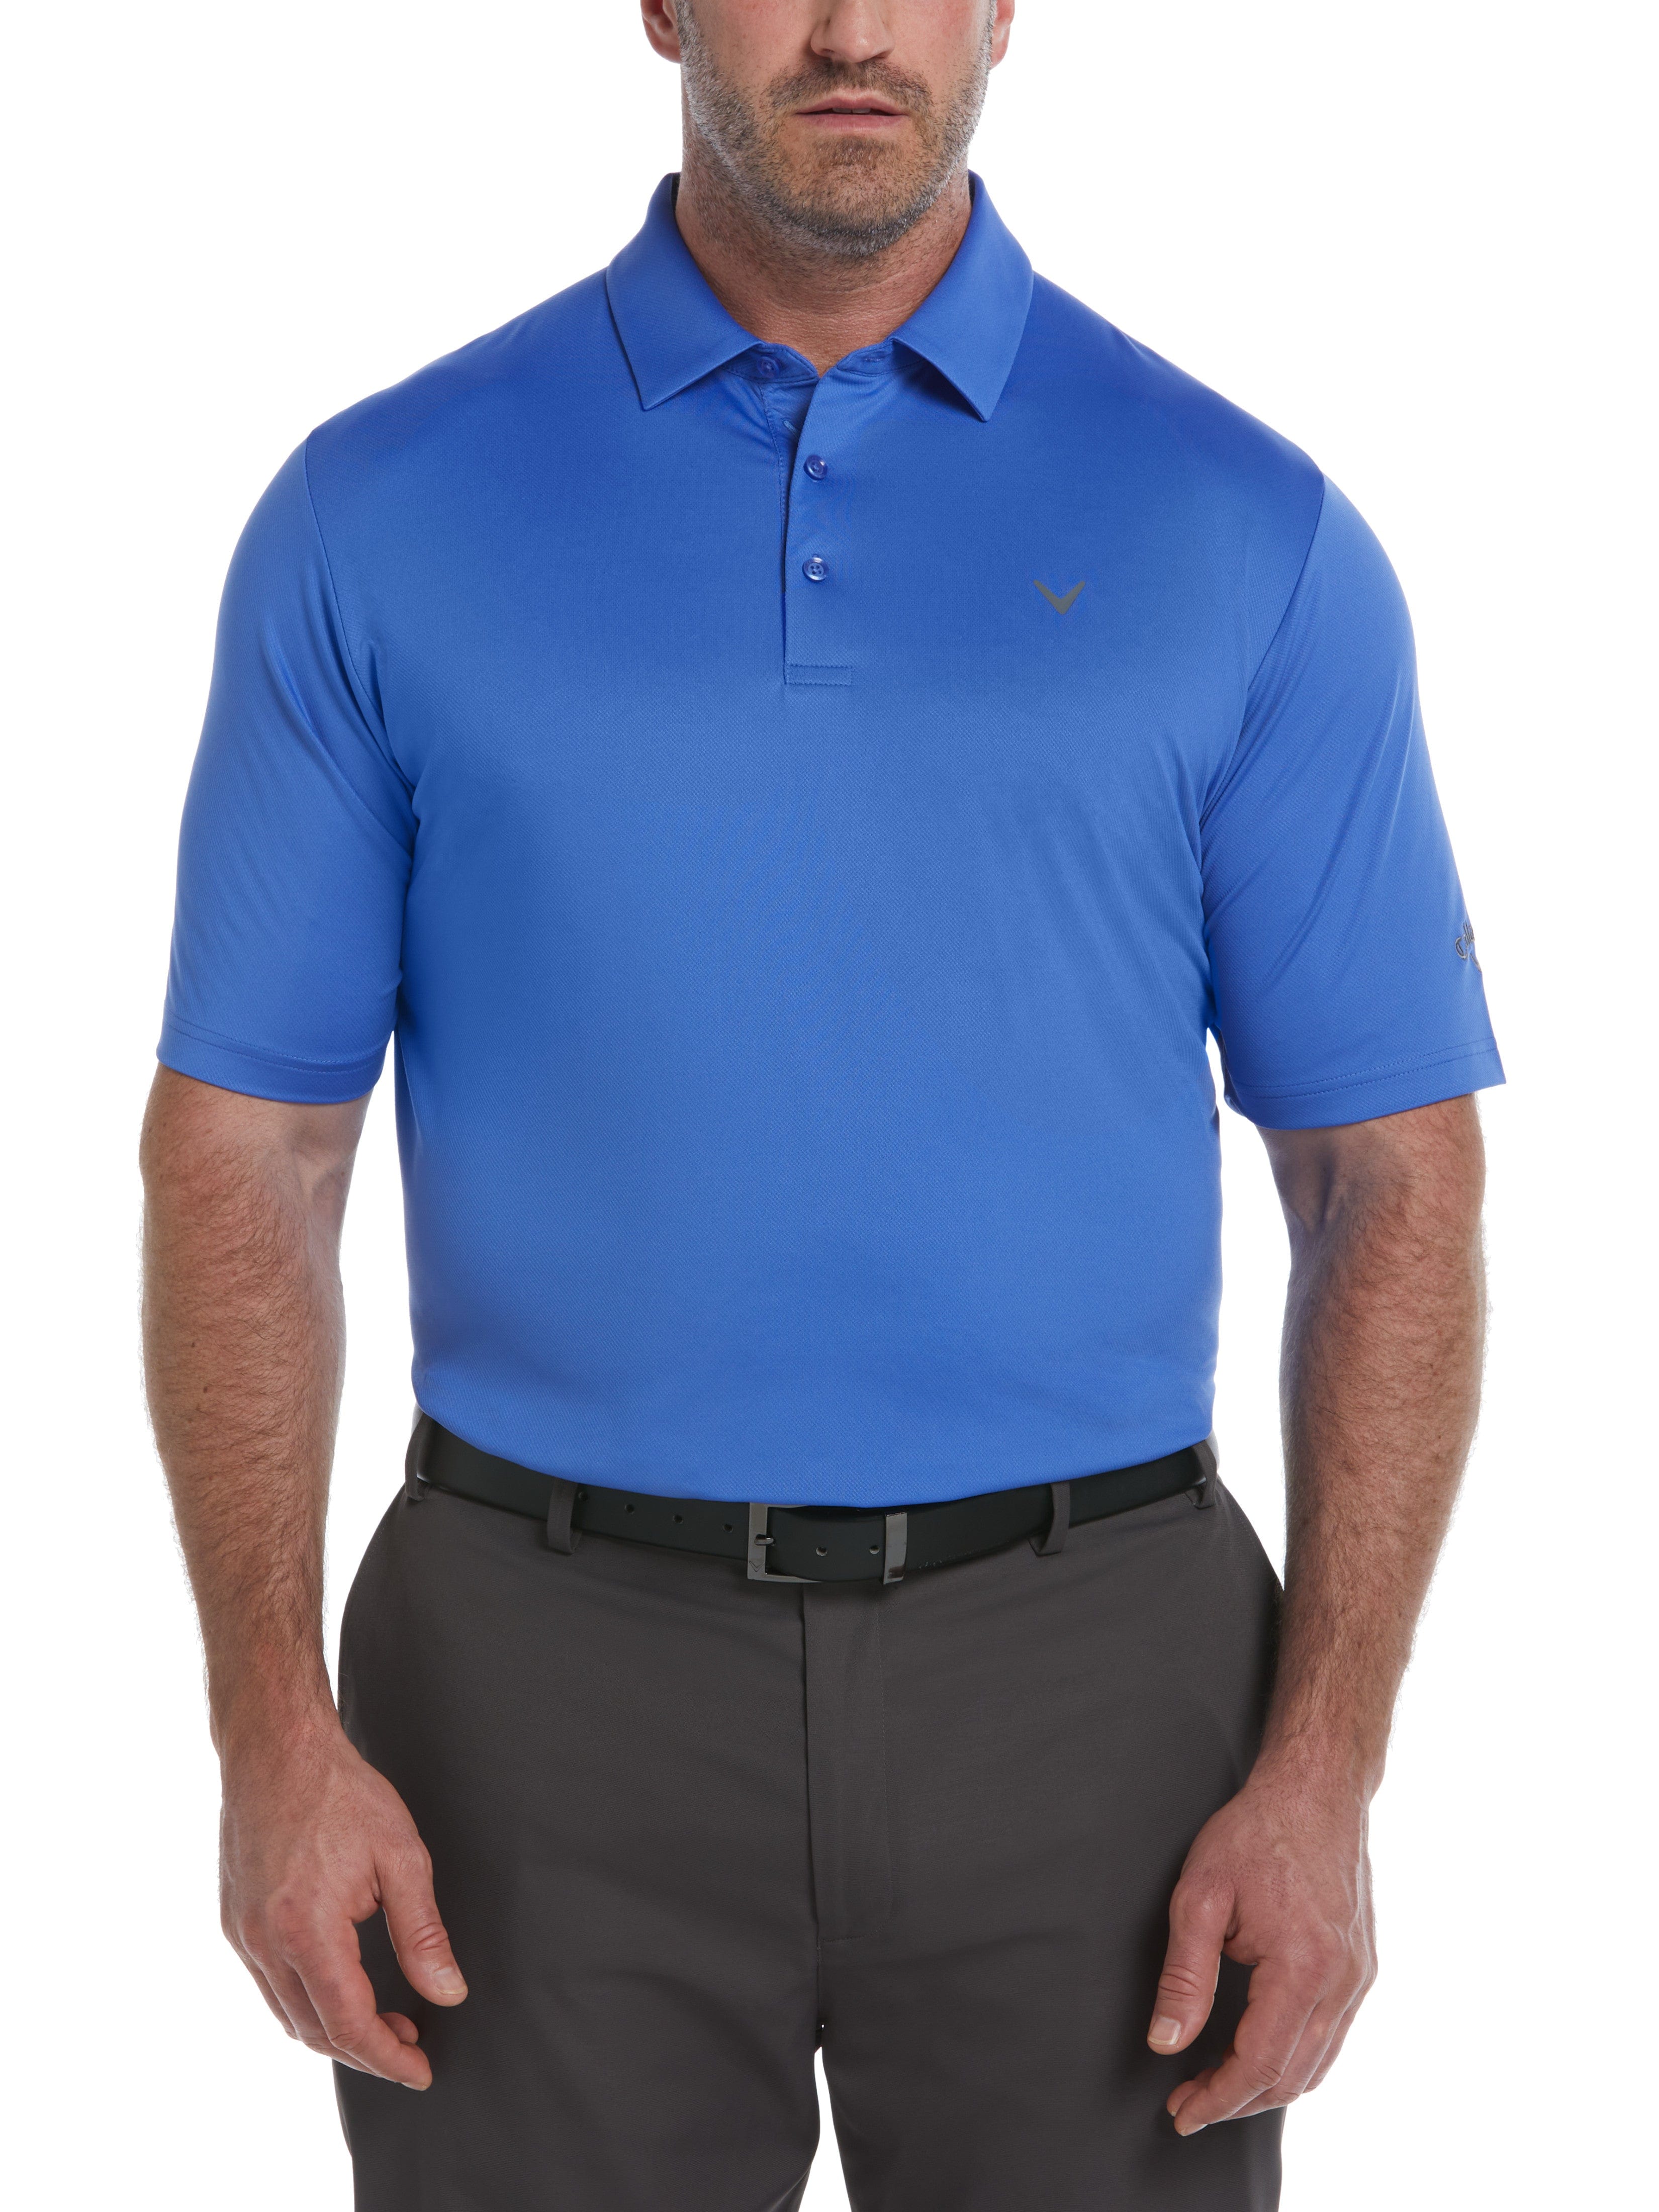 Callaway Apparel Mens Big & Tall Solid Swing Tech Golf Polo Shirt, Size LT, Amparo Blue, Polyester/Elastane | Golf Apparel Shop